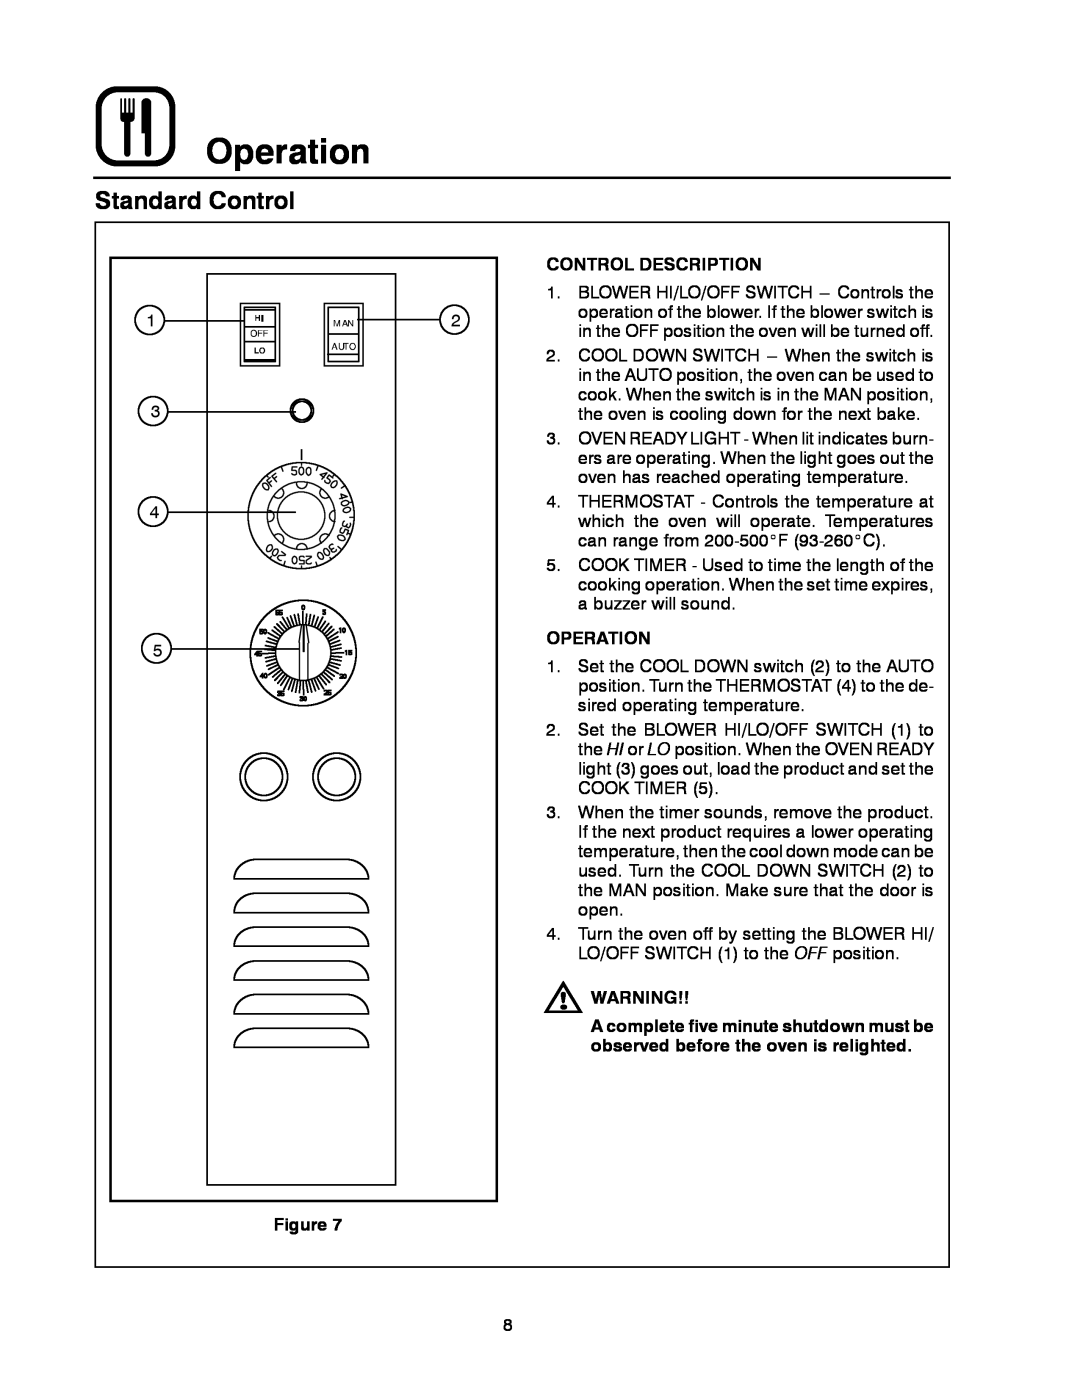 Blodgett SHO-E manual Operation, Standard Control, Control Description 